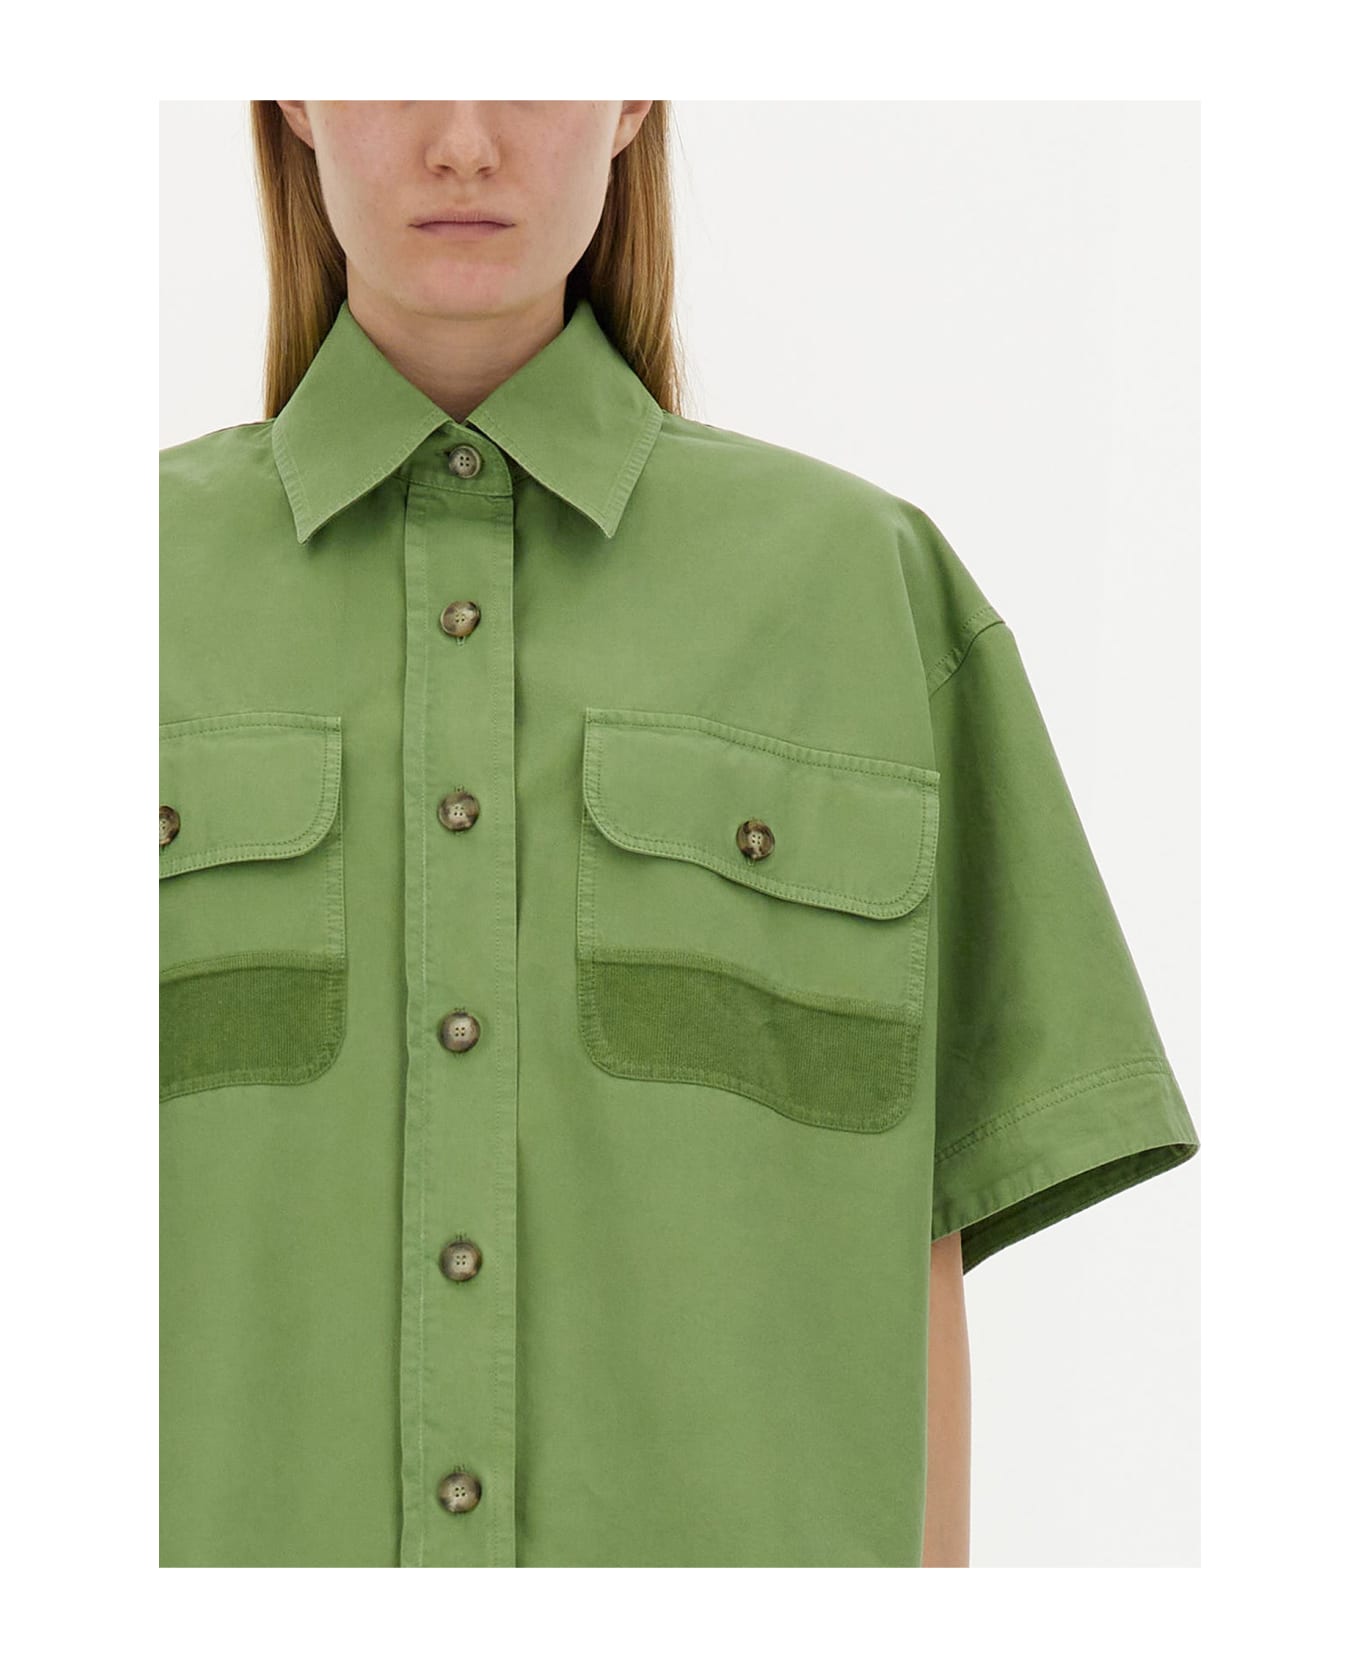 Stella McCartney Workwear Shirt - Pistachio